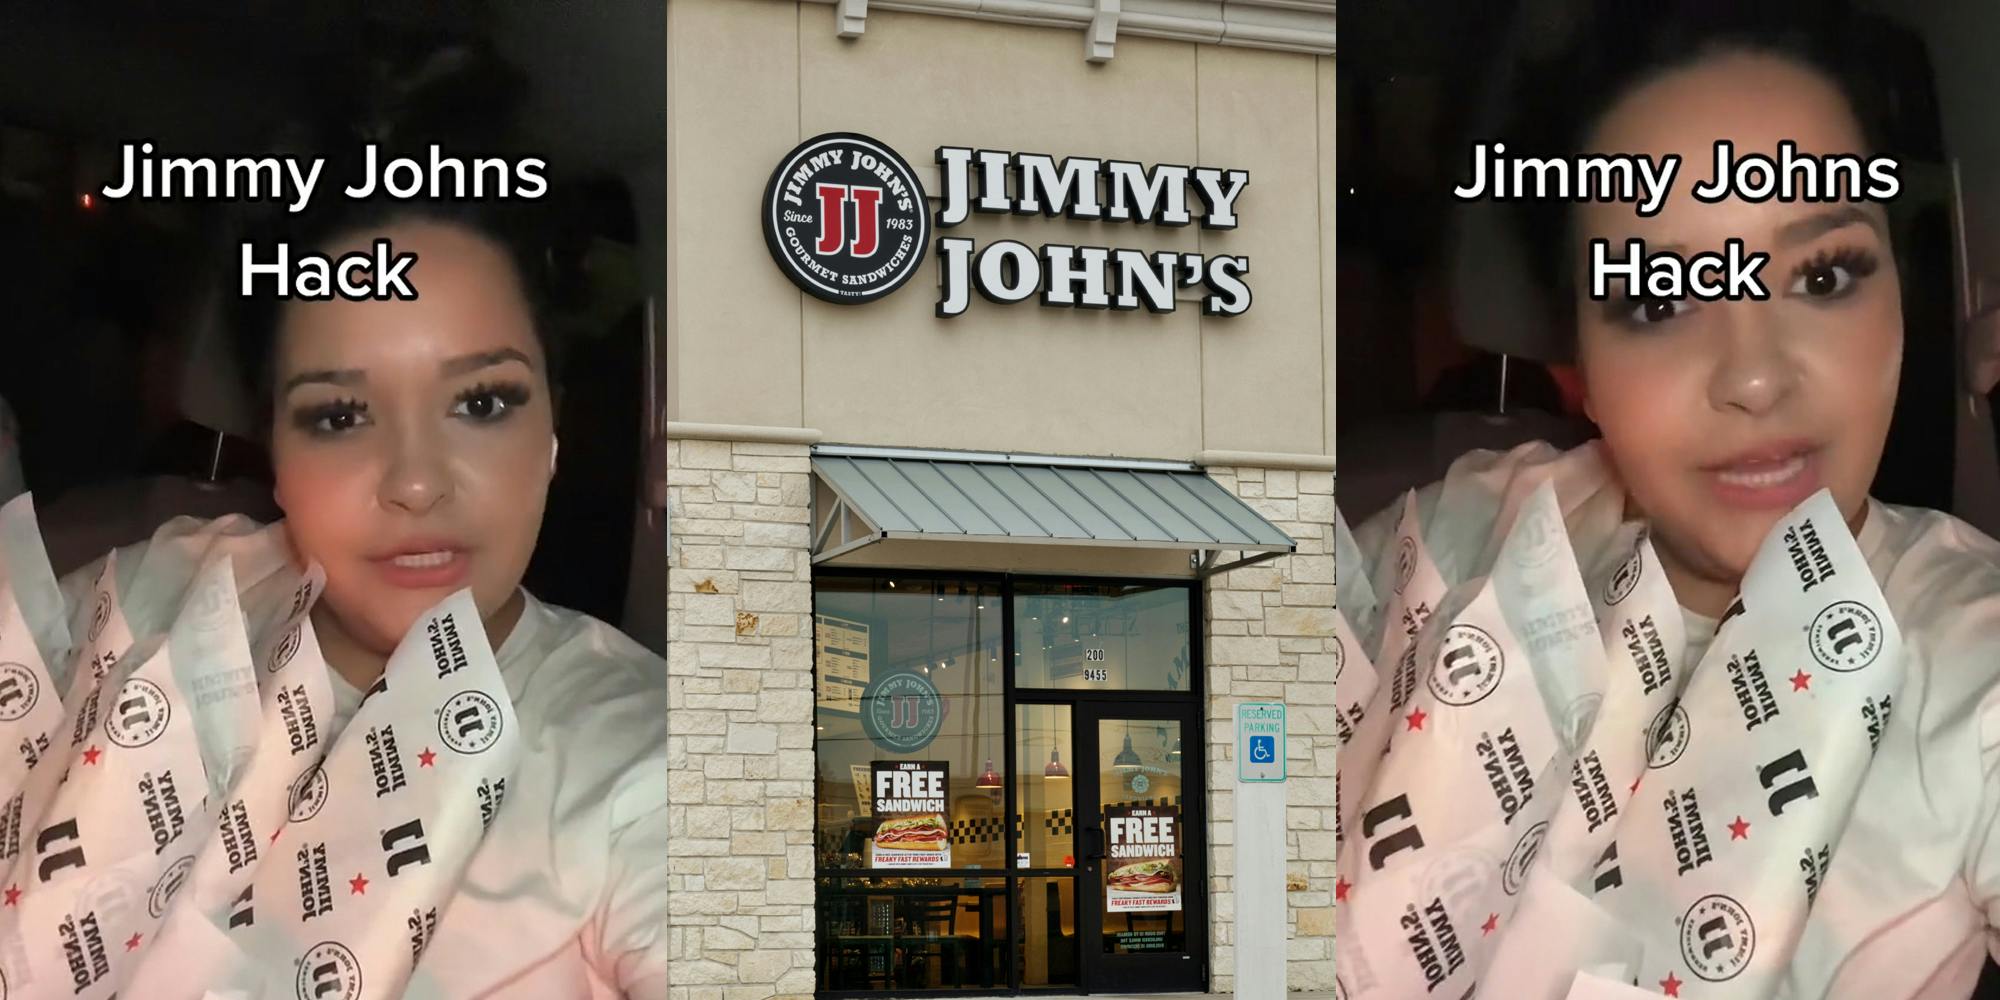 Jimmy John's customer speaking in car holding bread with caption "Jimmy John's hack" (l) Jimmy John's building with sign (c) Jimmy John's customer speaking in car holding bread with caption "Jimmy John's hack" (r)